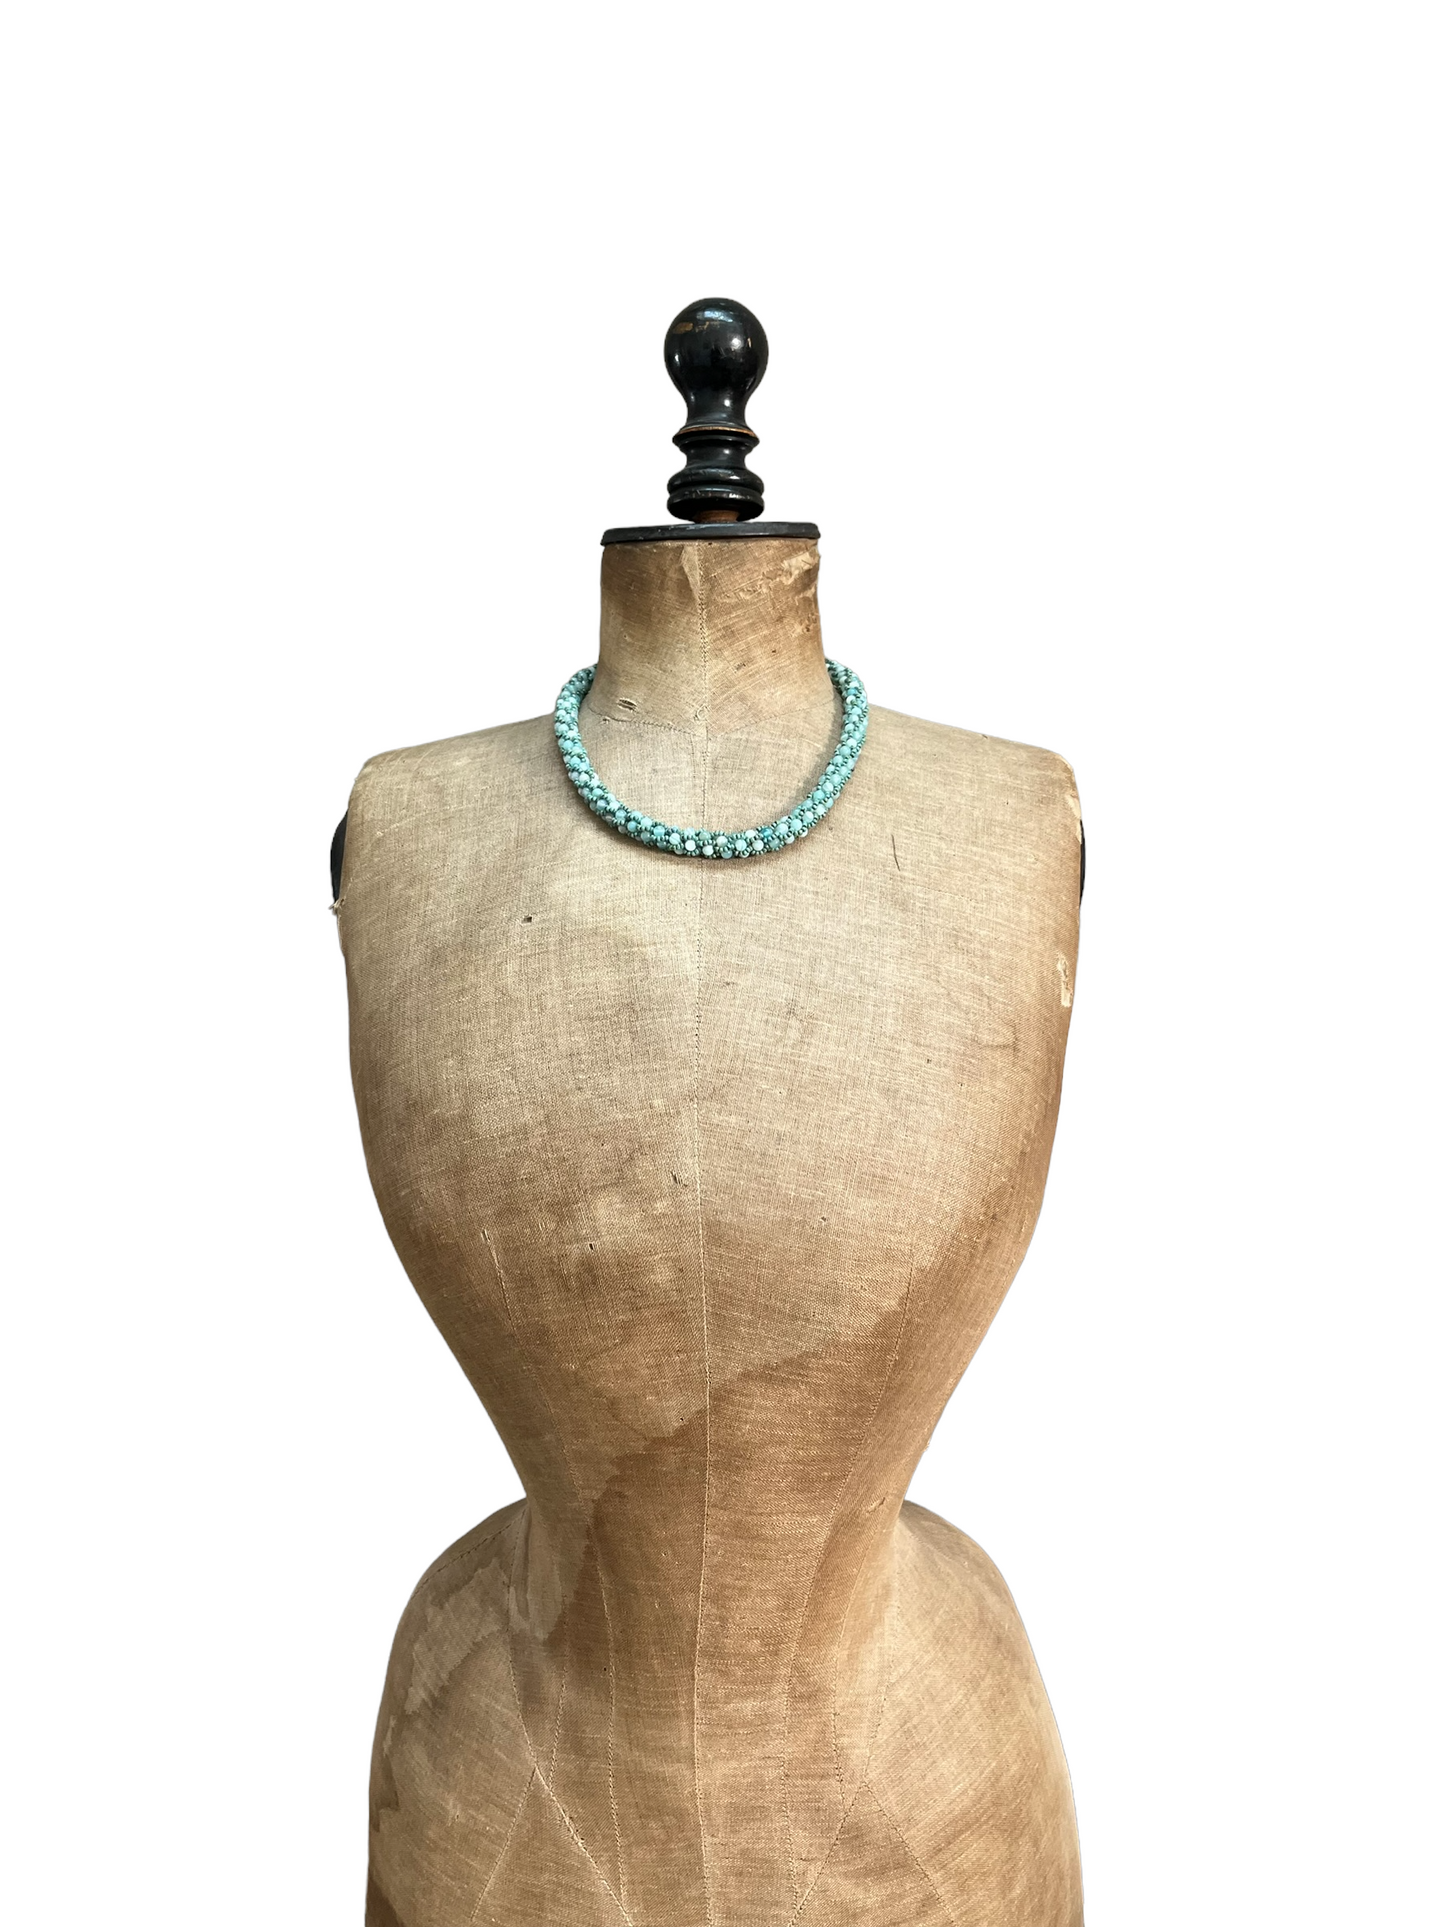 Collier au crochet en agate et perles Miyuki, 47 cm